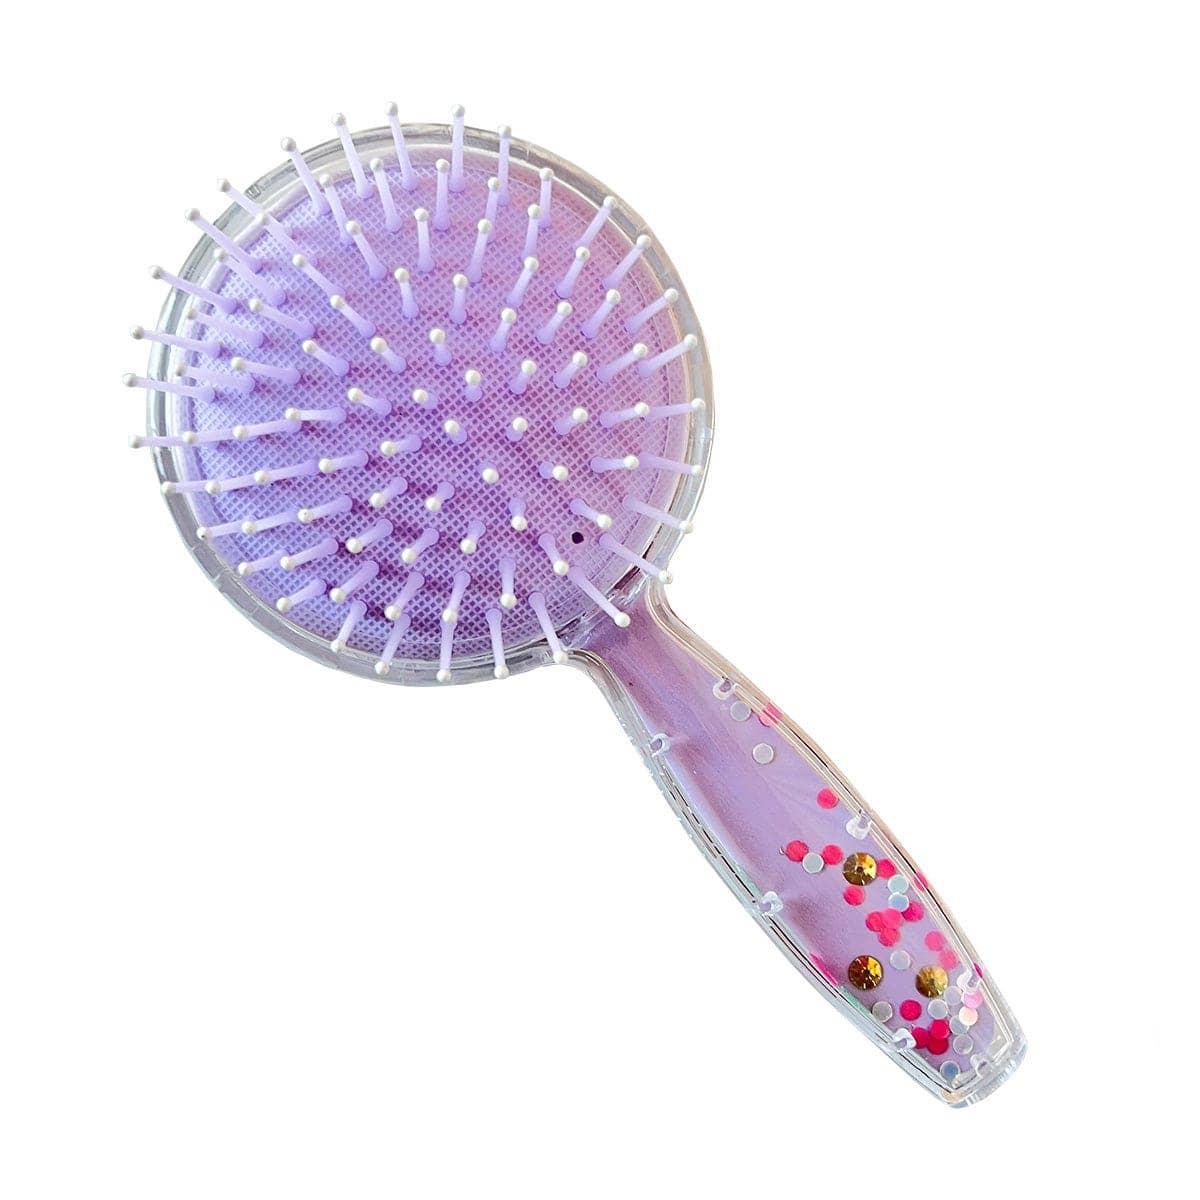 Spe-Shell Confetti Hairbrush